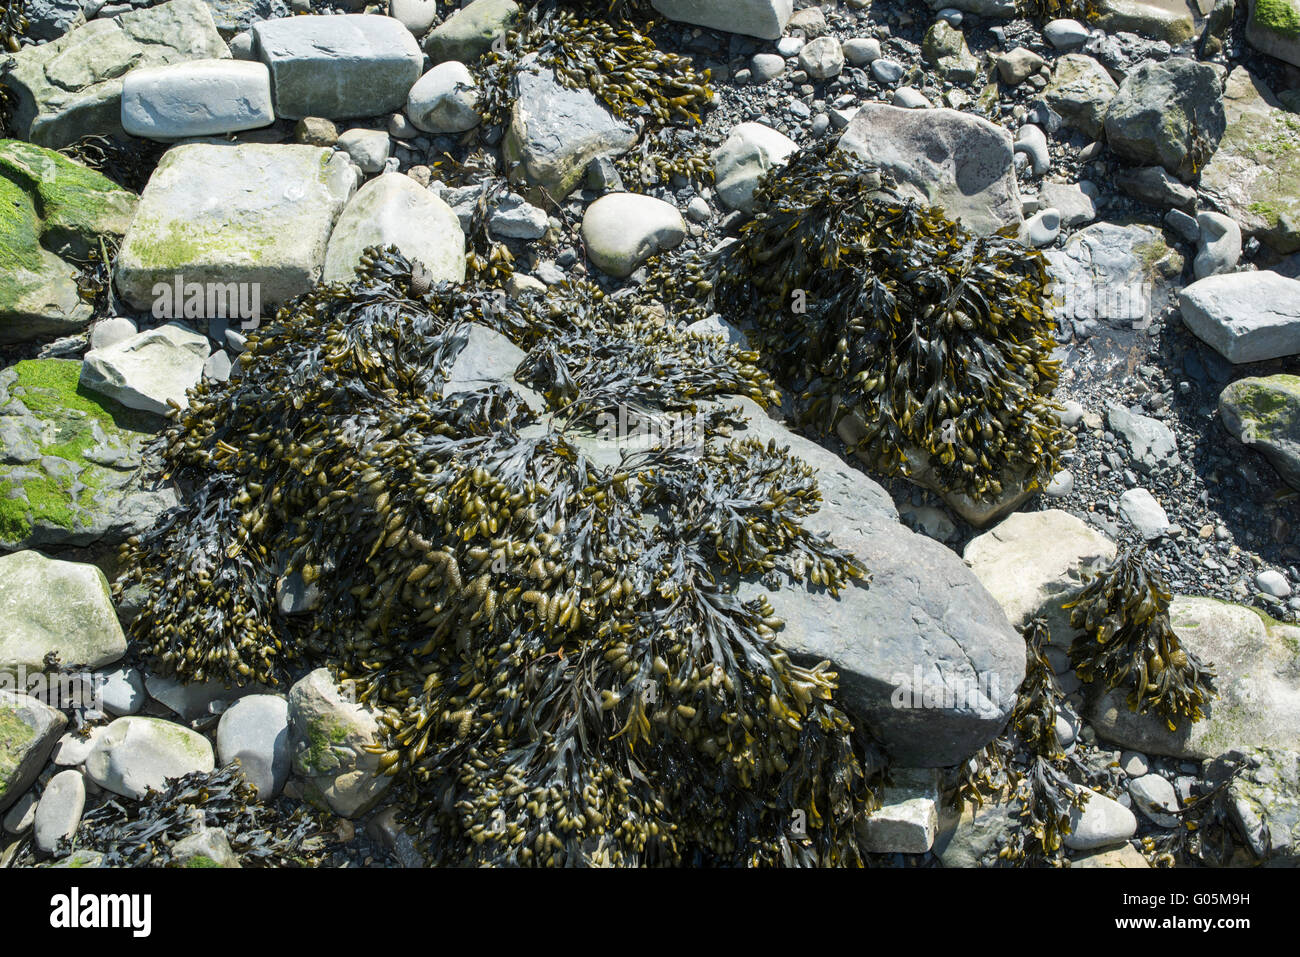 Seaweed amongst rocks on a pebble beach. Stock Photo